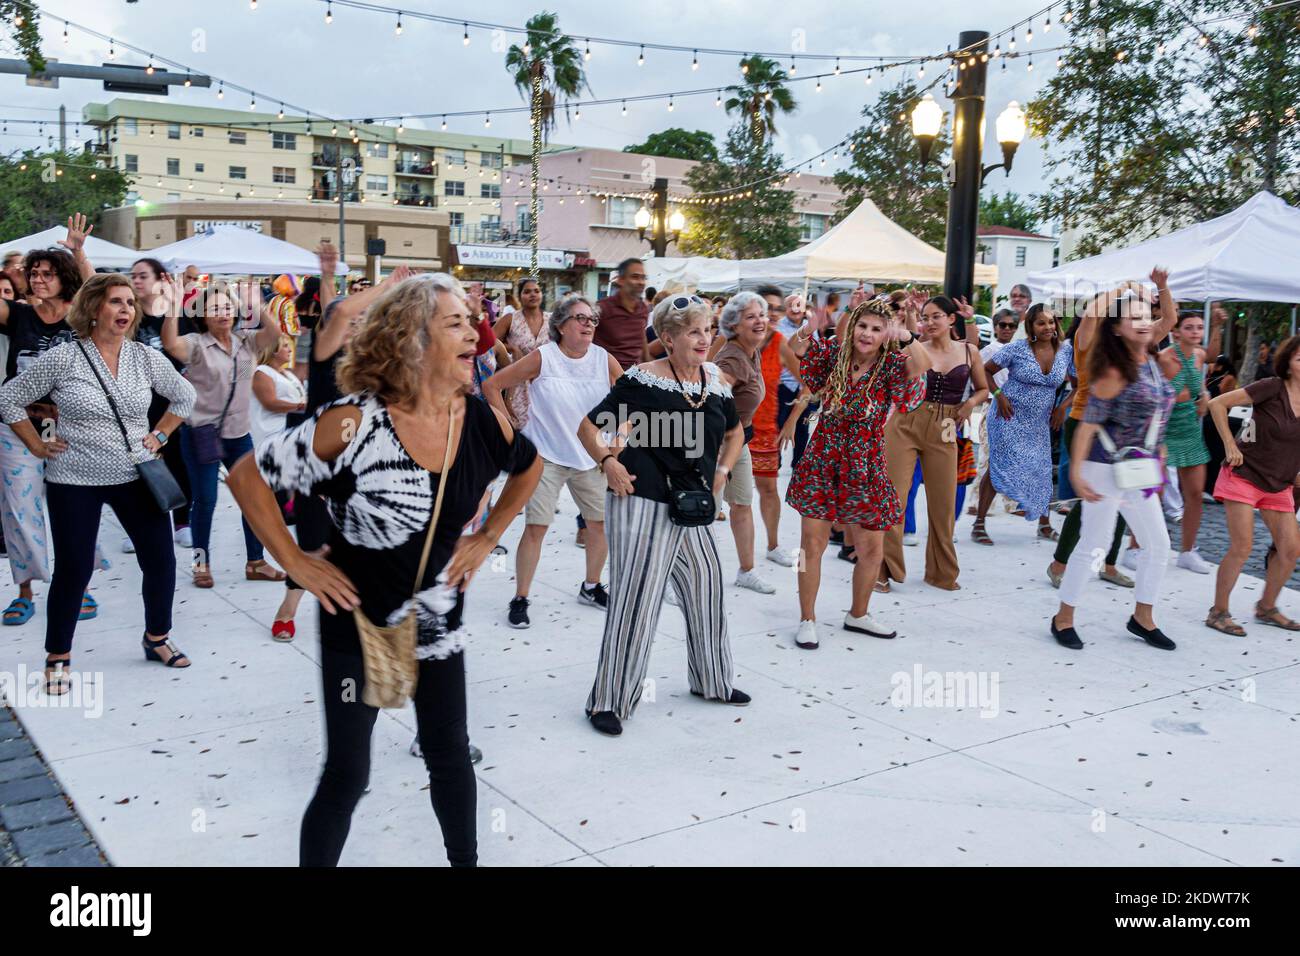 Miami Beach Florida,Normandie Isle Day of the Dead Salsa Party,Zumba Line dancing dancing danseuses fun,groupe dansant fun,femme femme femme femme couple femme co Banque D'Images